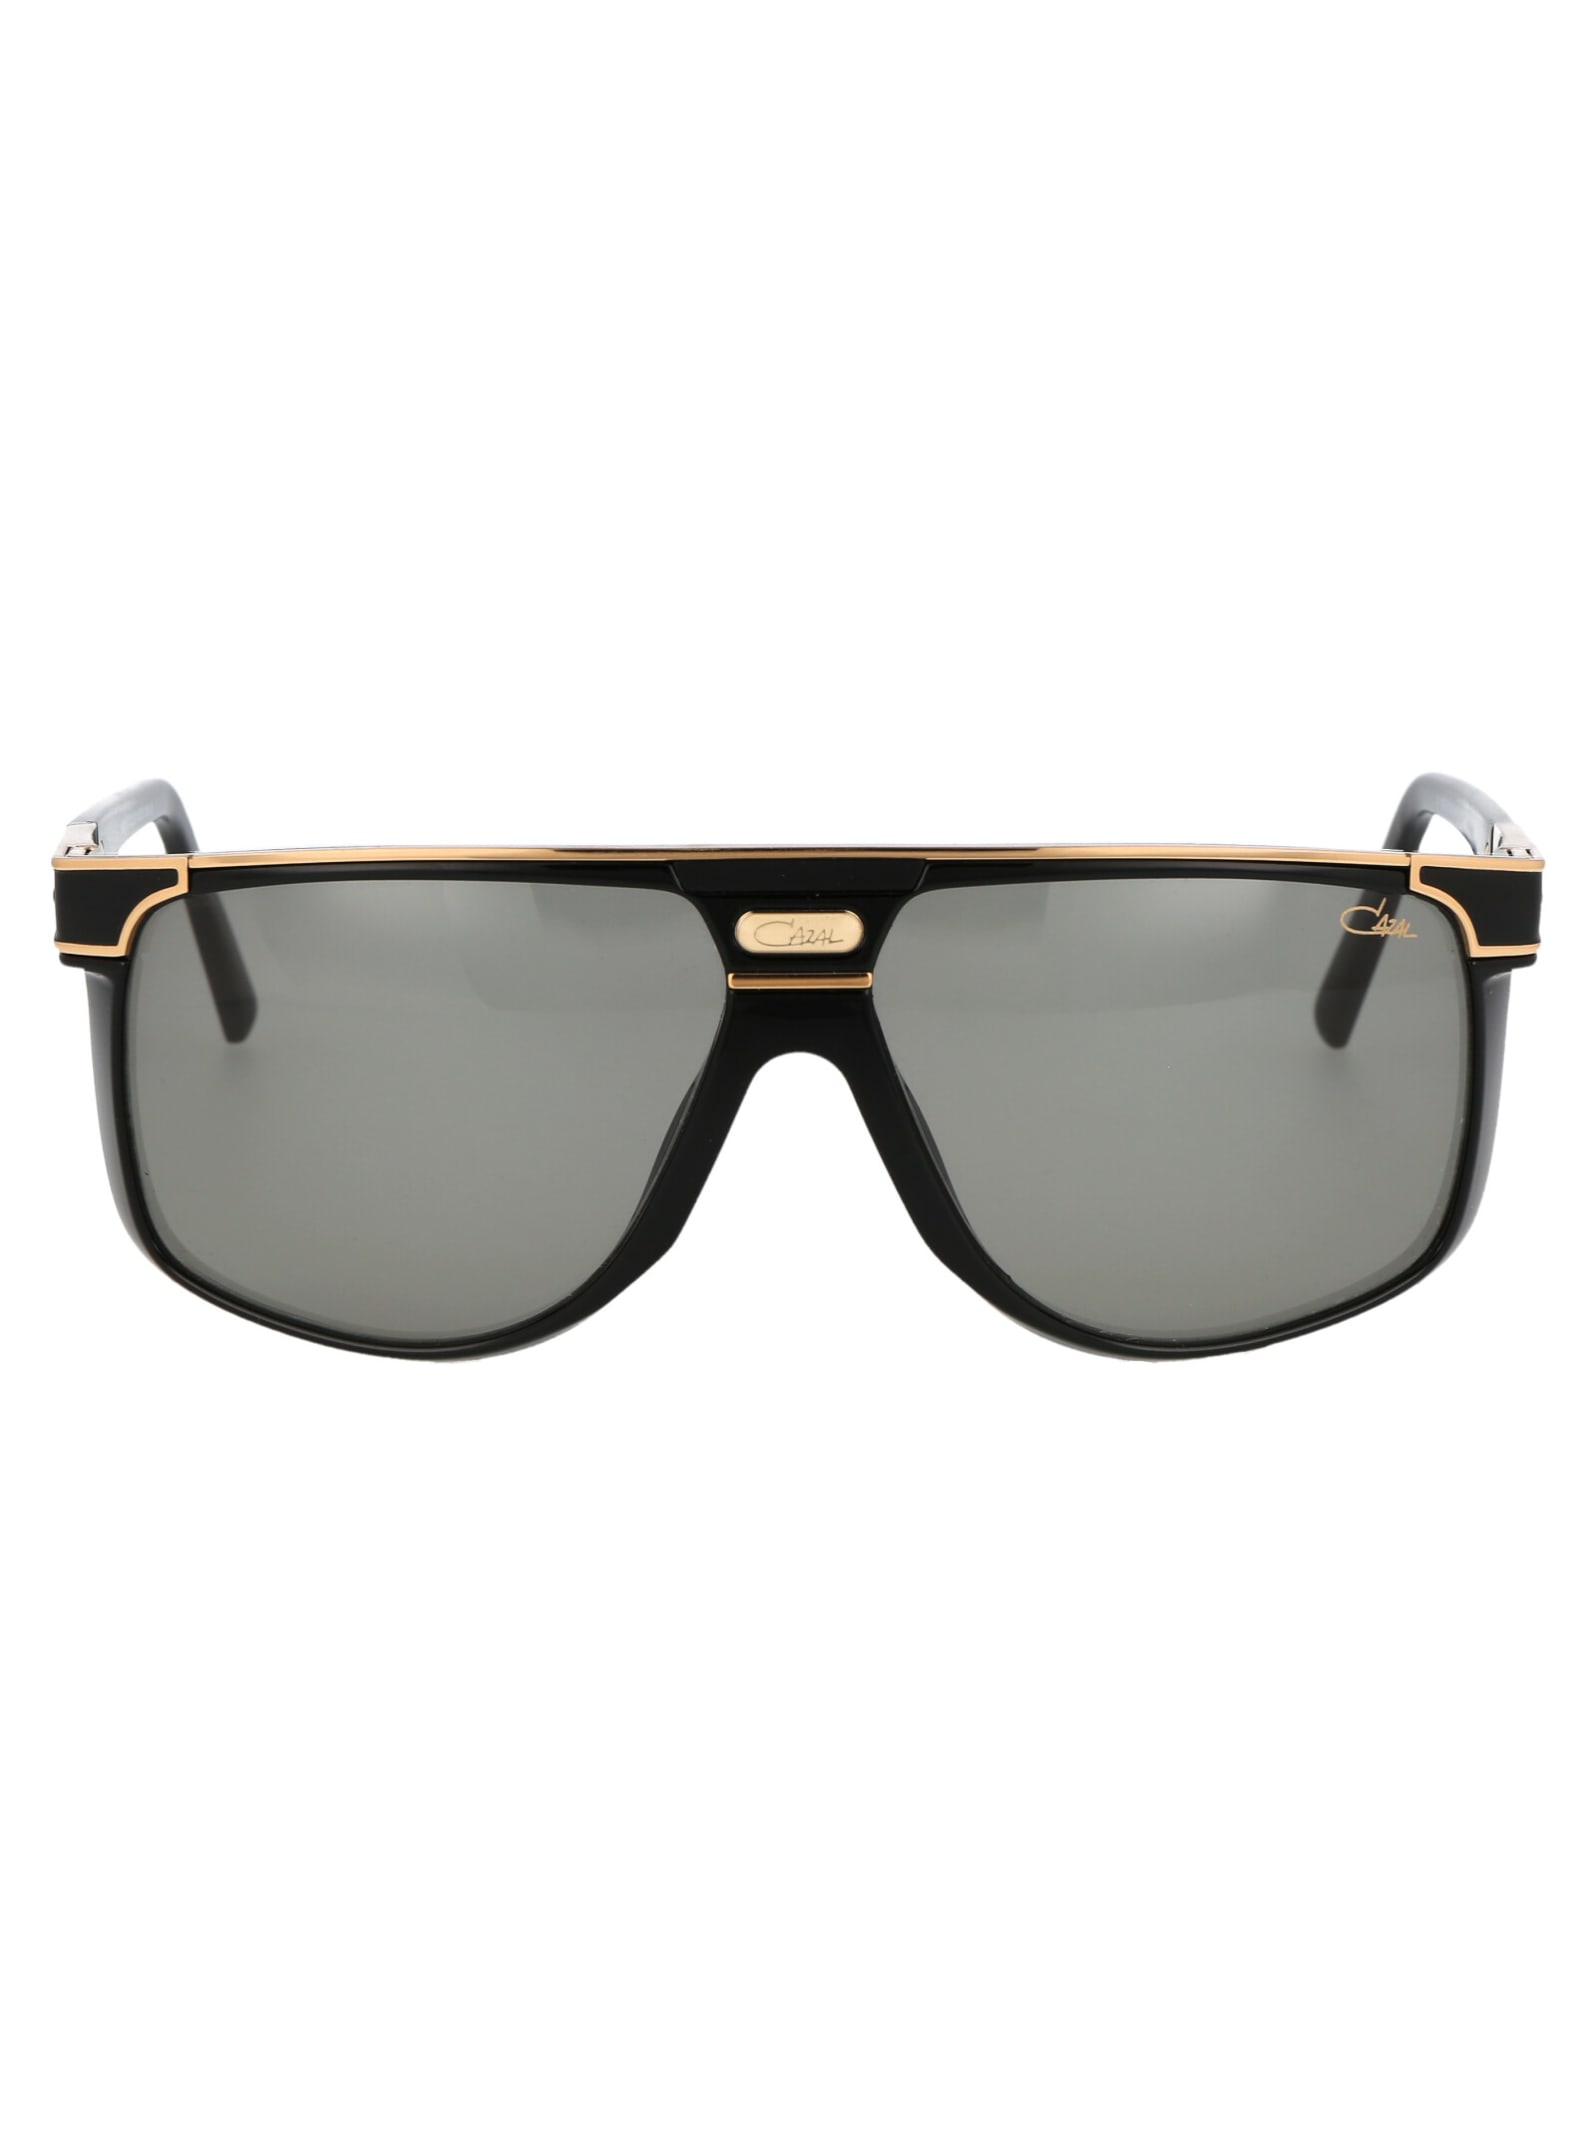 Cazal Mod. 673 Sunglasses